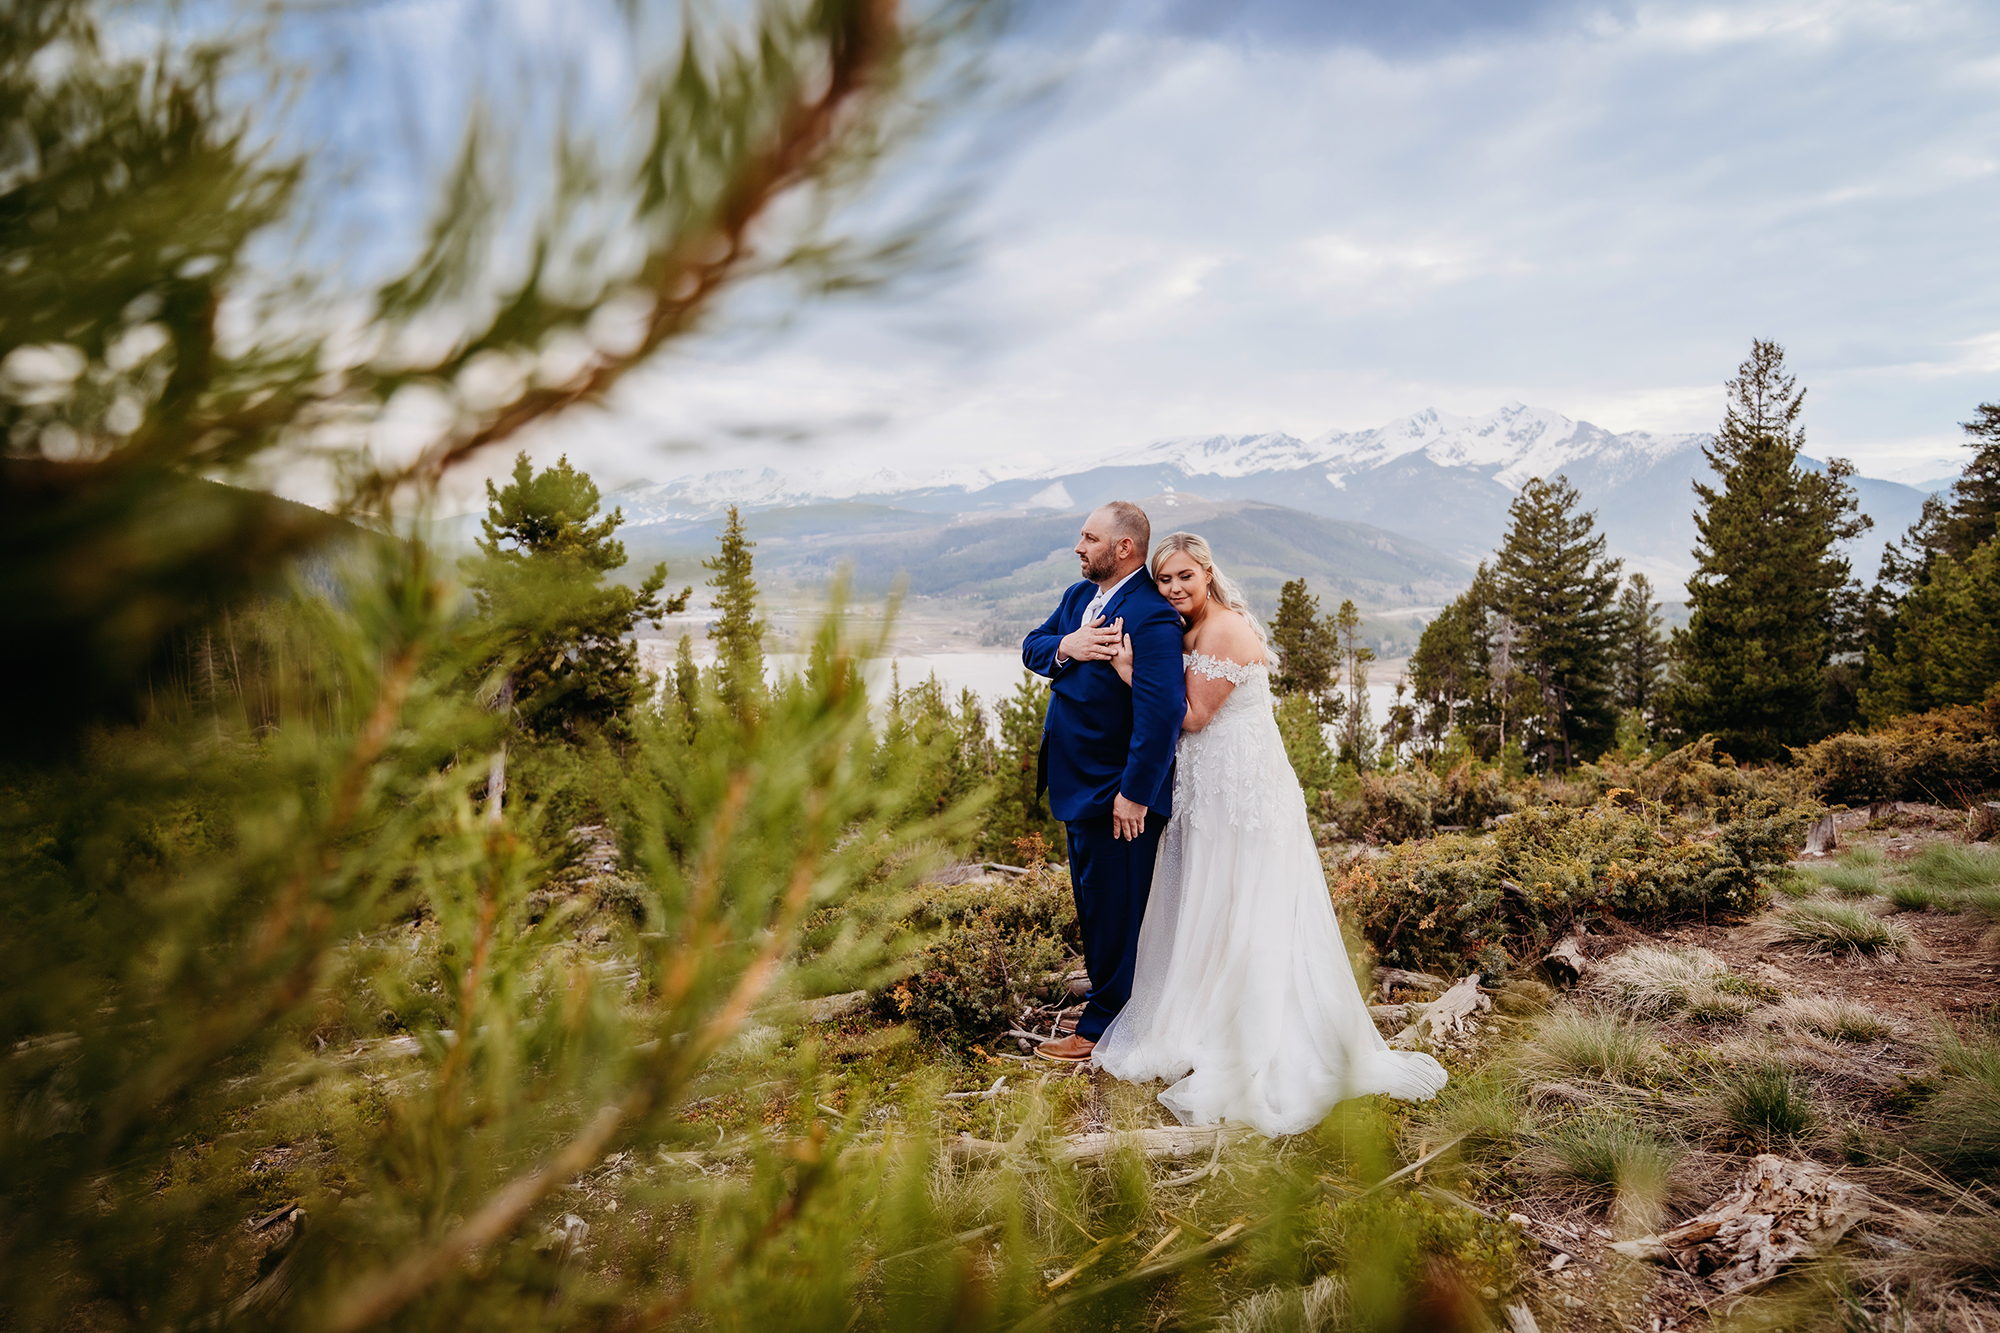 Colorado elopement photographer captures bride and groom embracing after intimate elopement